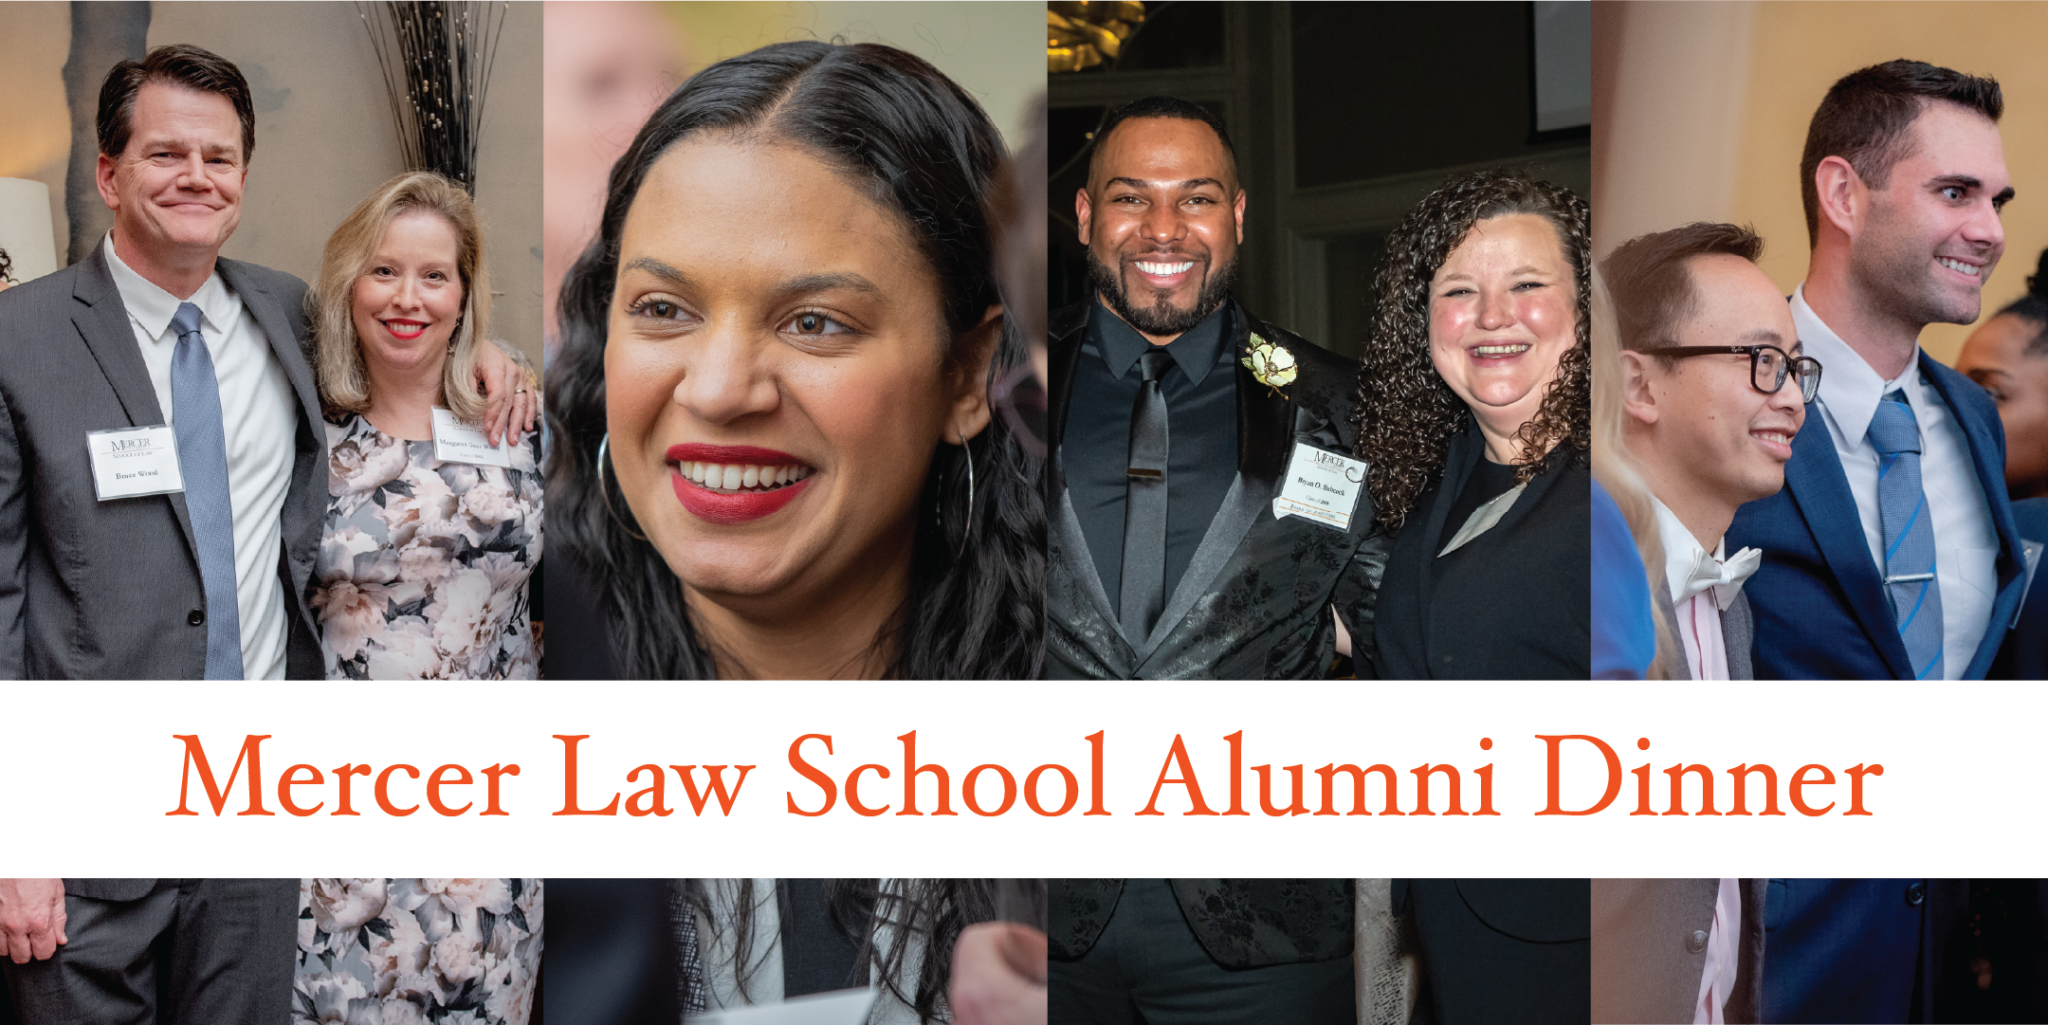 Mercer Law School Alumni Dinner, photos of alumni smiling